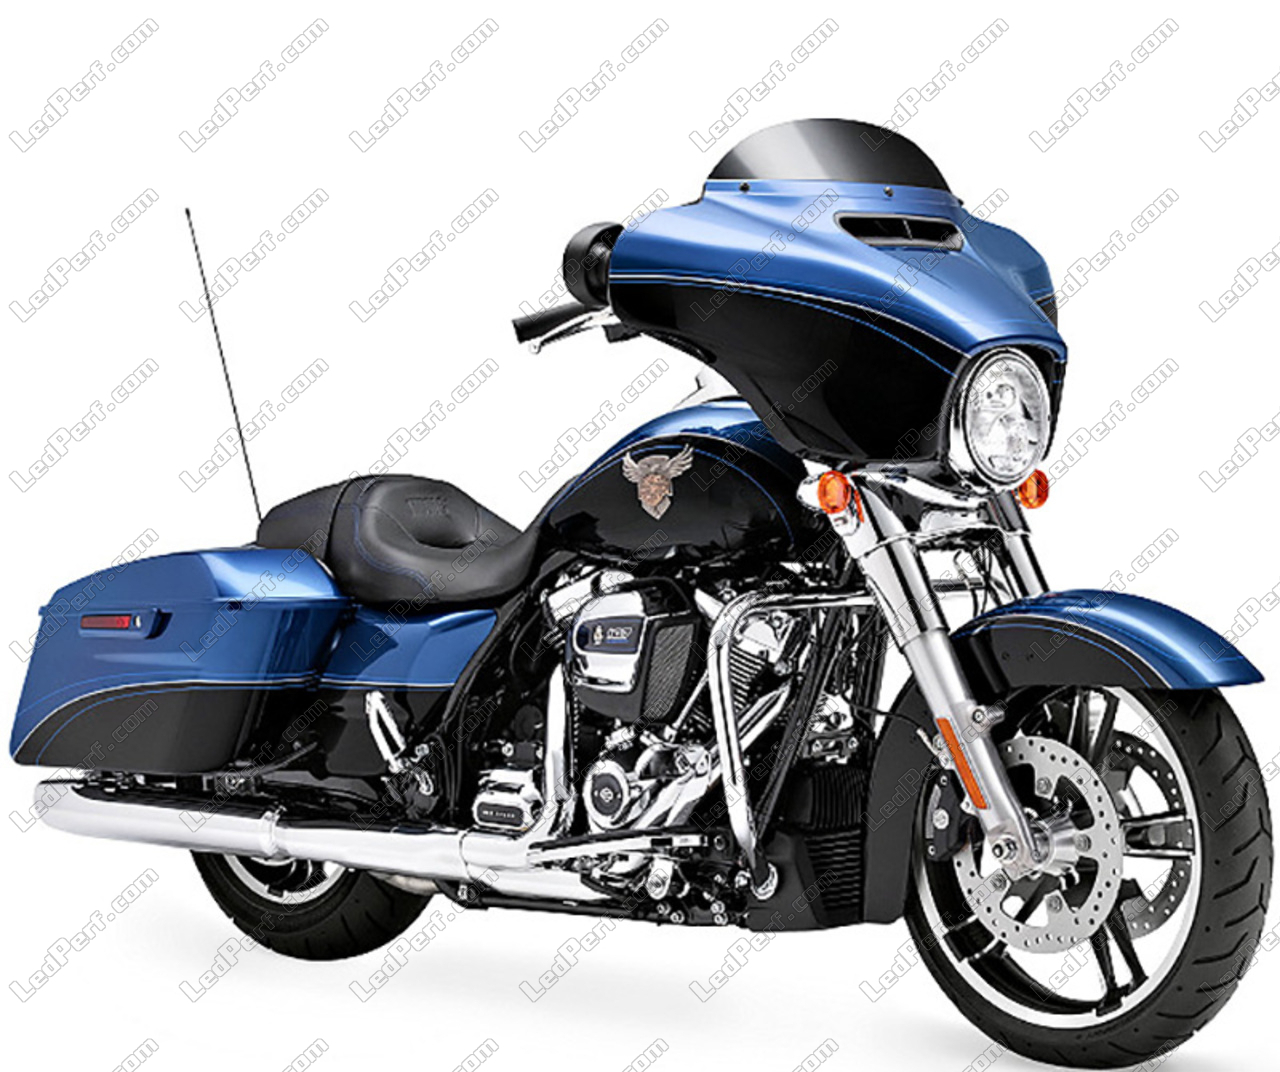 https://www.ledperf.eu/images/models/ledperf.com/._1/led-headlight-for-harley-davidson-street-glide-1745-round-motorcycle-optics-approved_64237.jpg